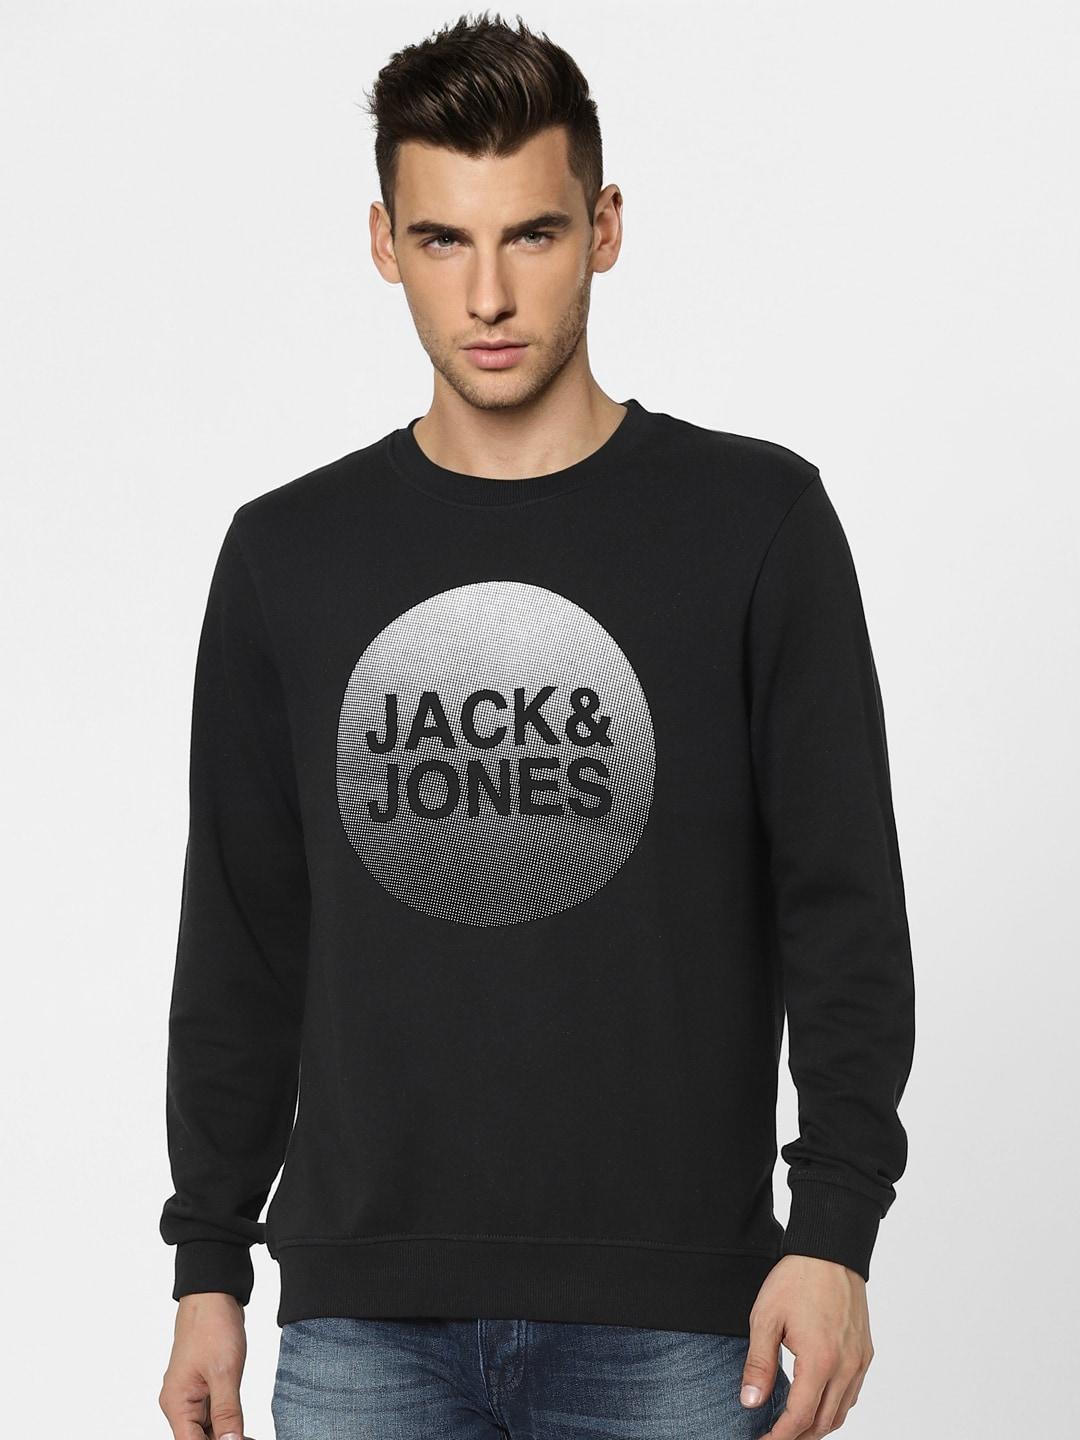 jack & jones men black logo printed sweatshirt